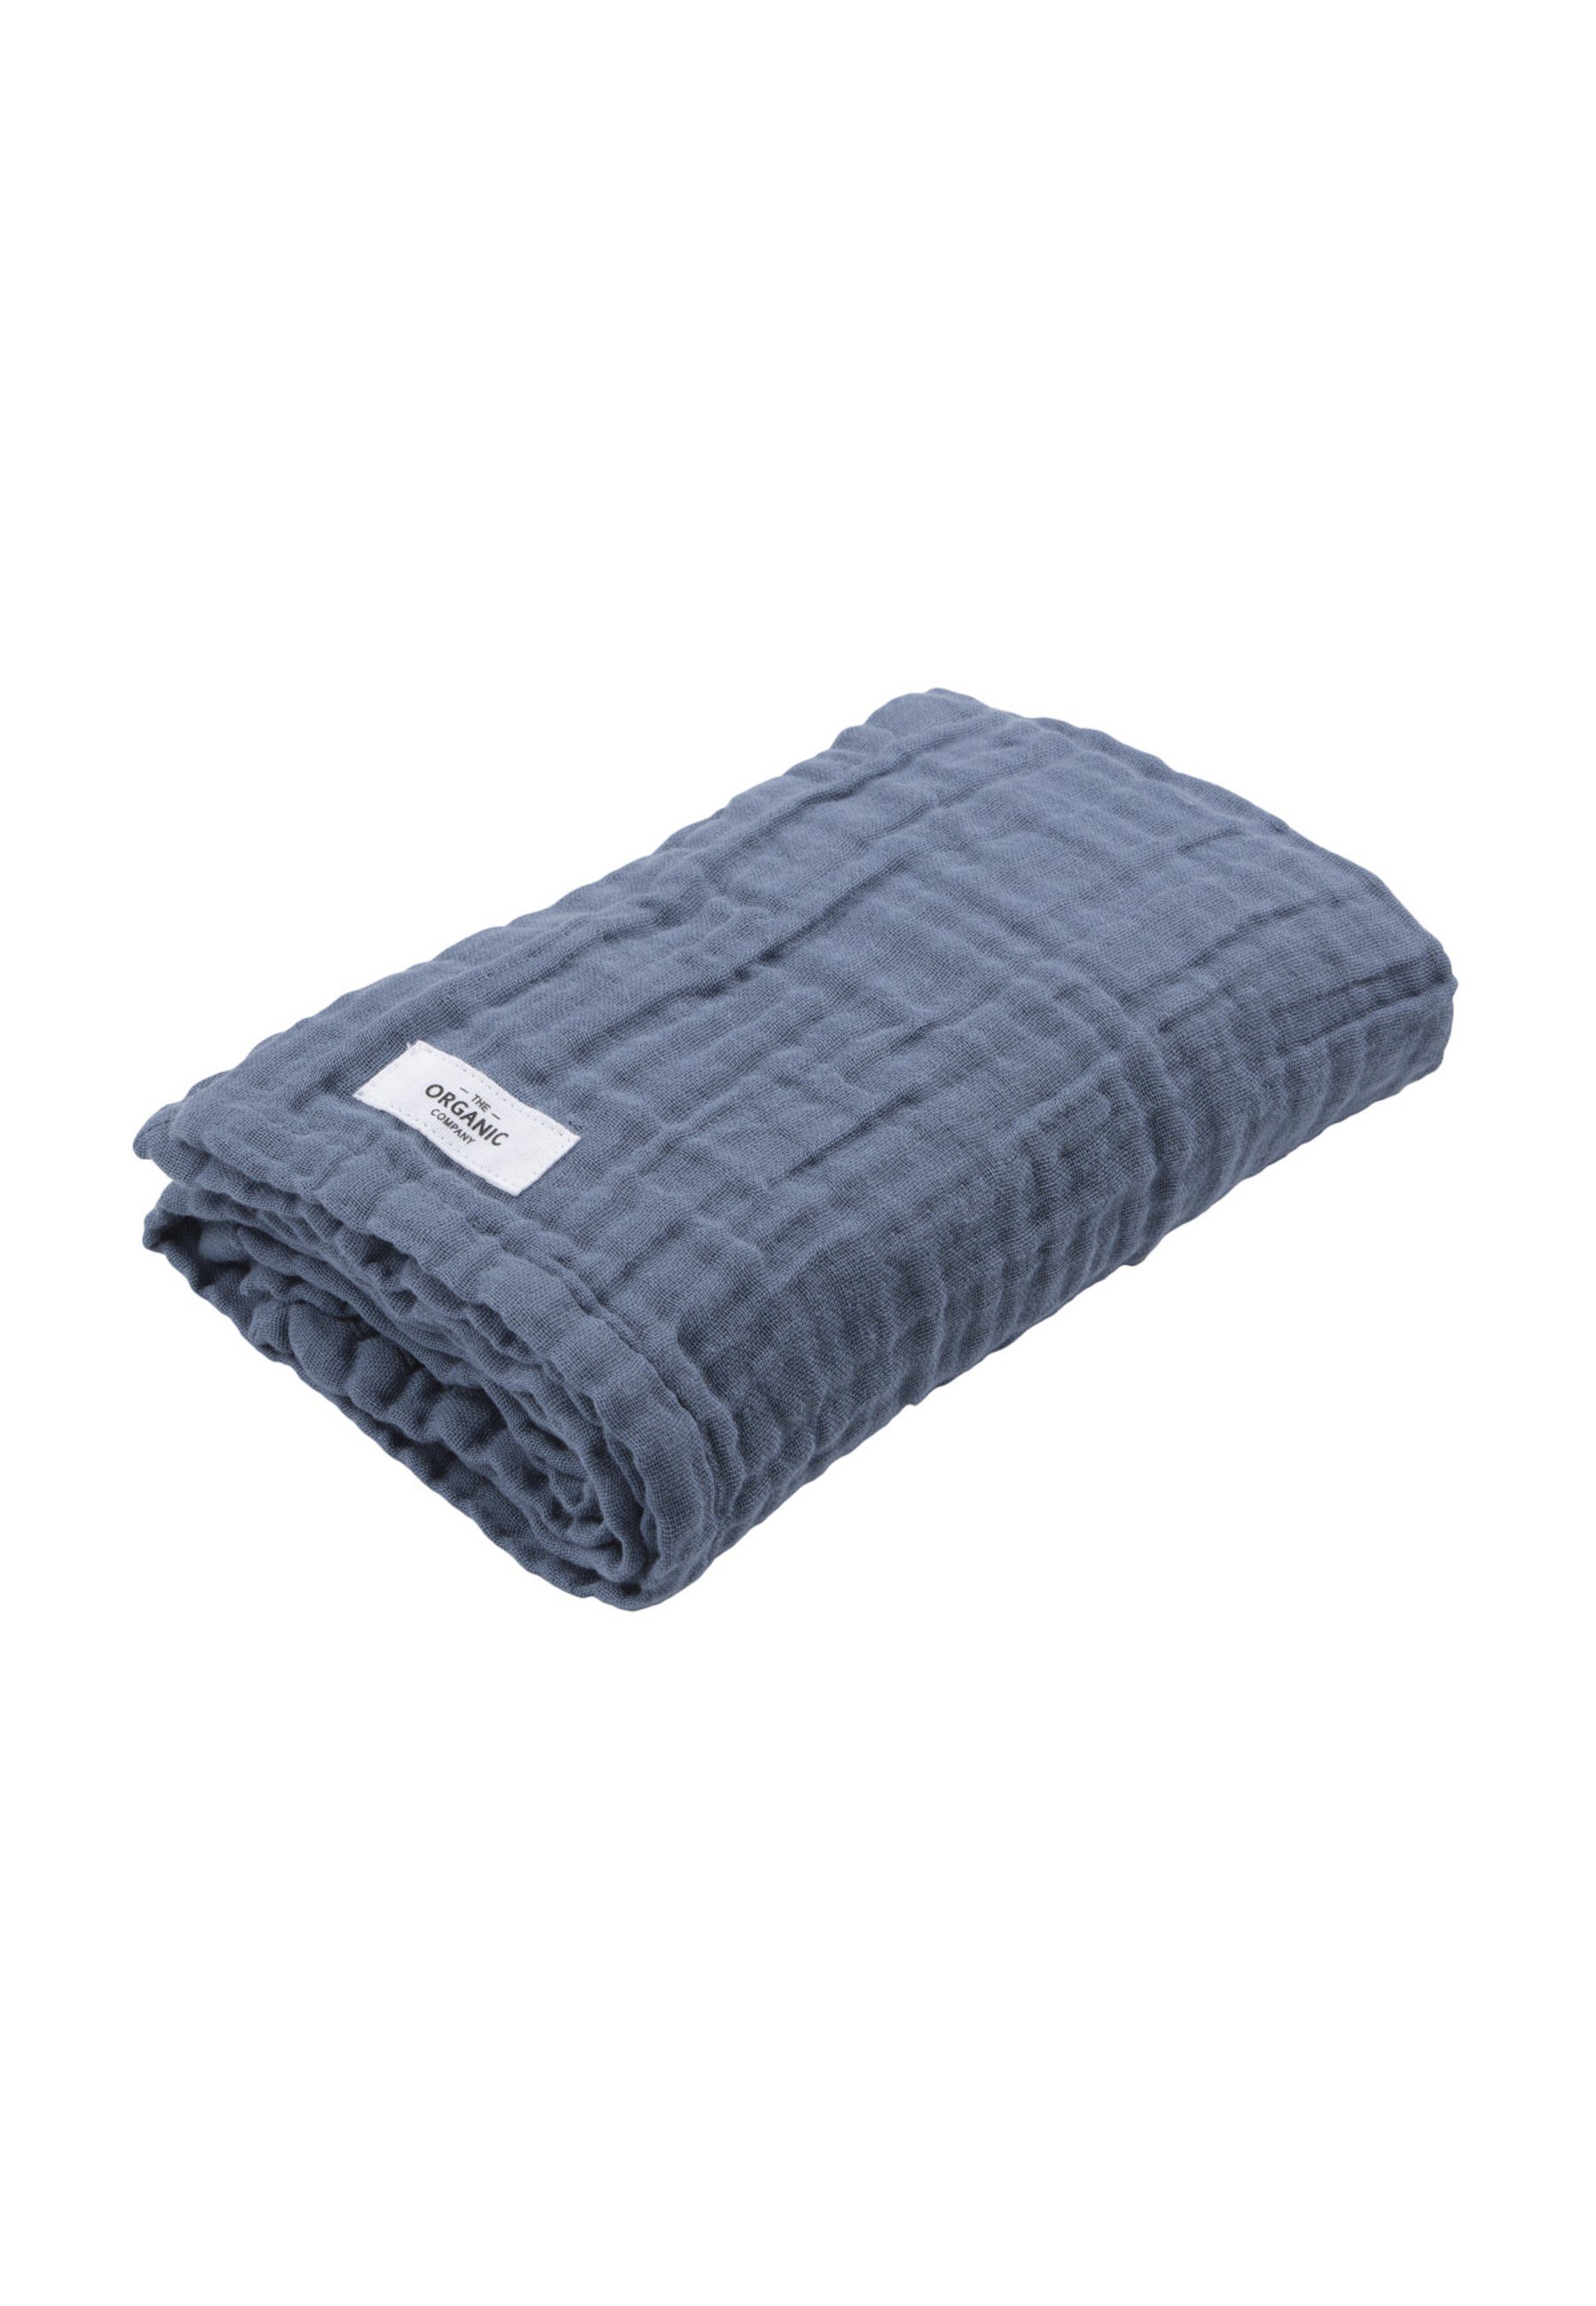 GOTS FINE Towel, Company Organic Bio-Baumwolle The Blue- grau/blau Gauze, Hand Grey Handtuch zertifizierte